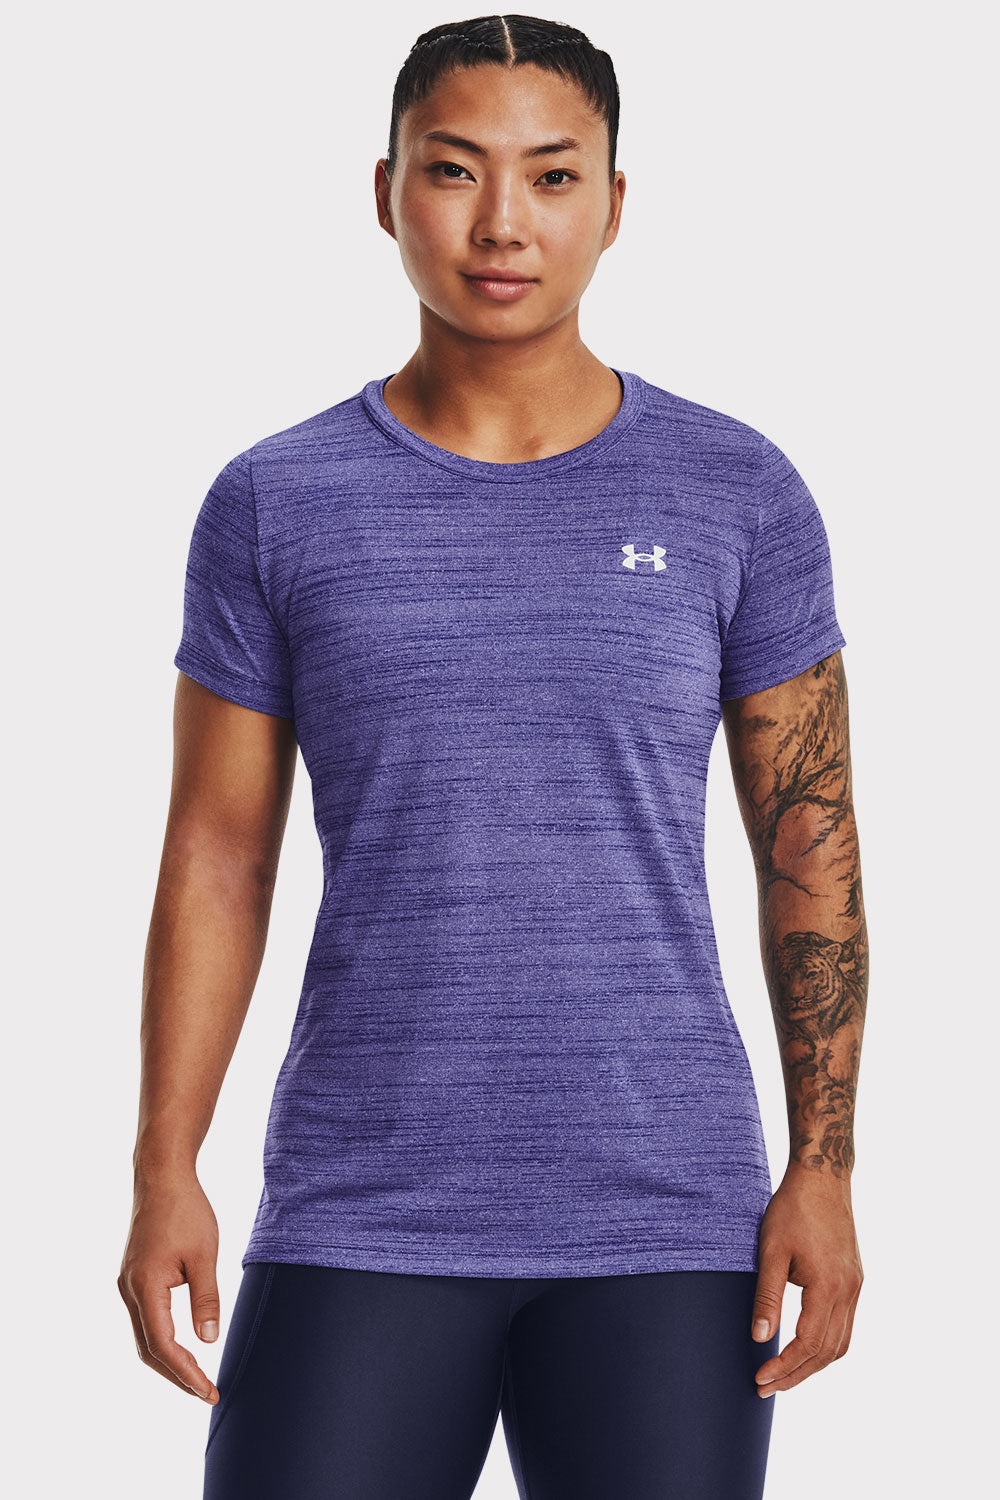 Under Armour UA Tech Tiger SSC - Sonar Blue Purple / SM T-shirt